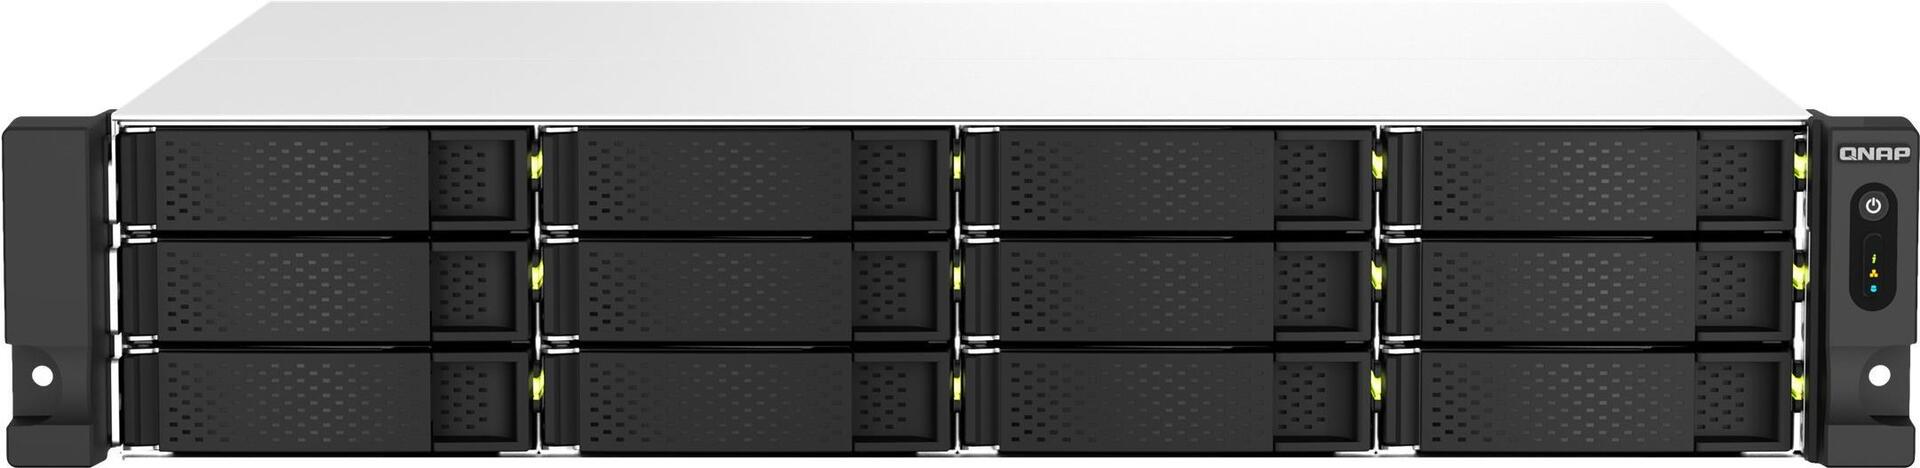 QNAP TS-1264U-RP - NAS-Server - 12 Schächte - Rack - einbaufähig - SATA 6Gb/s - RAID RAID 0, 1, 5, 6, 10, 50, JBOD, 60 - RAM 8GB - 2,5 Gigabit Ethernet - iSCSI Support - 2U (TS-1264U-RP-8G)